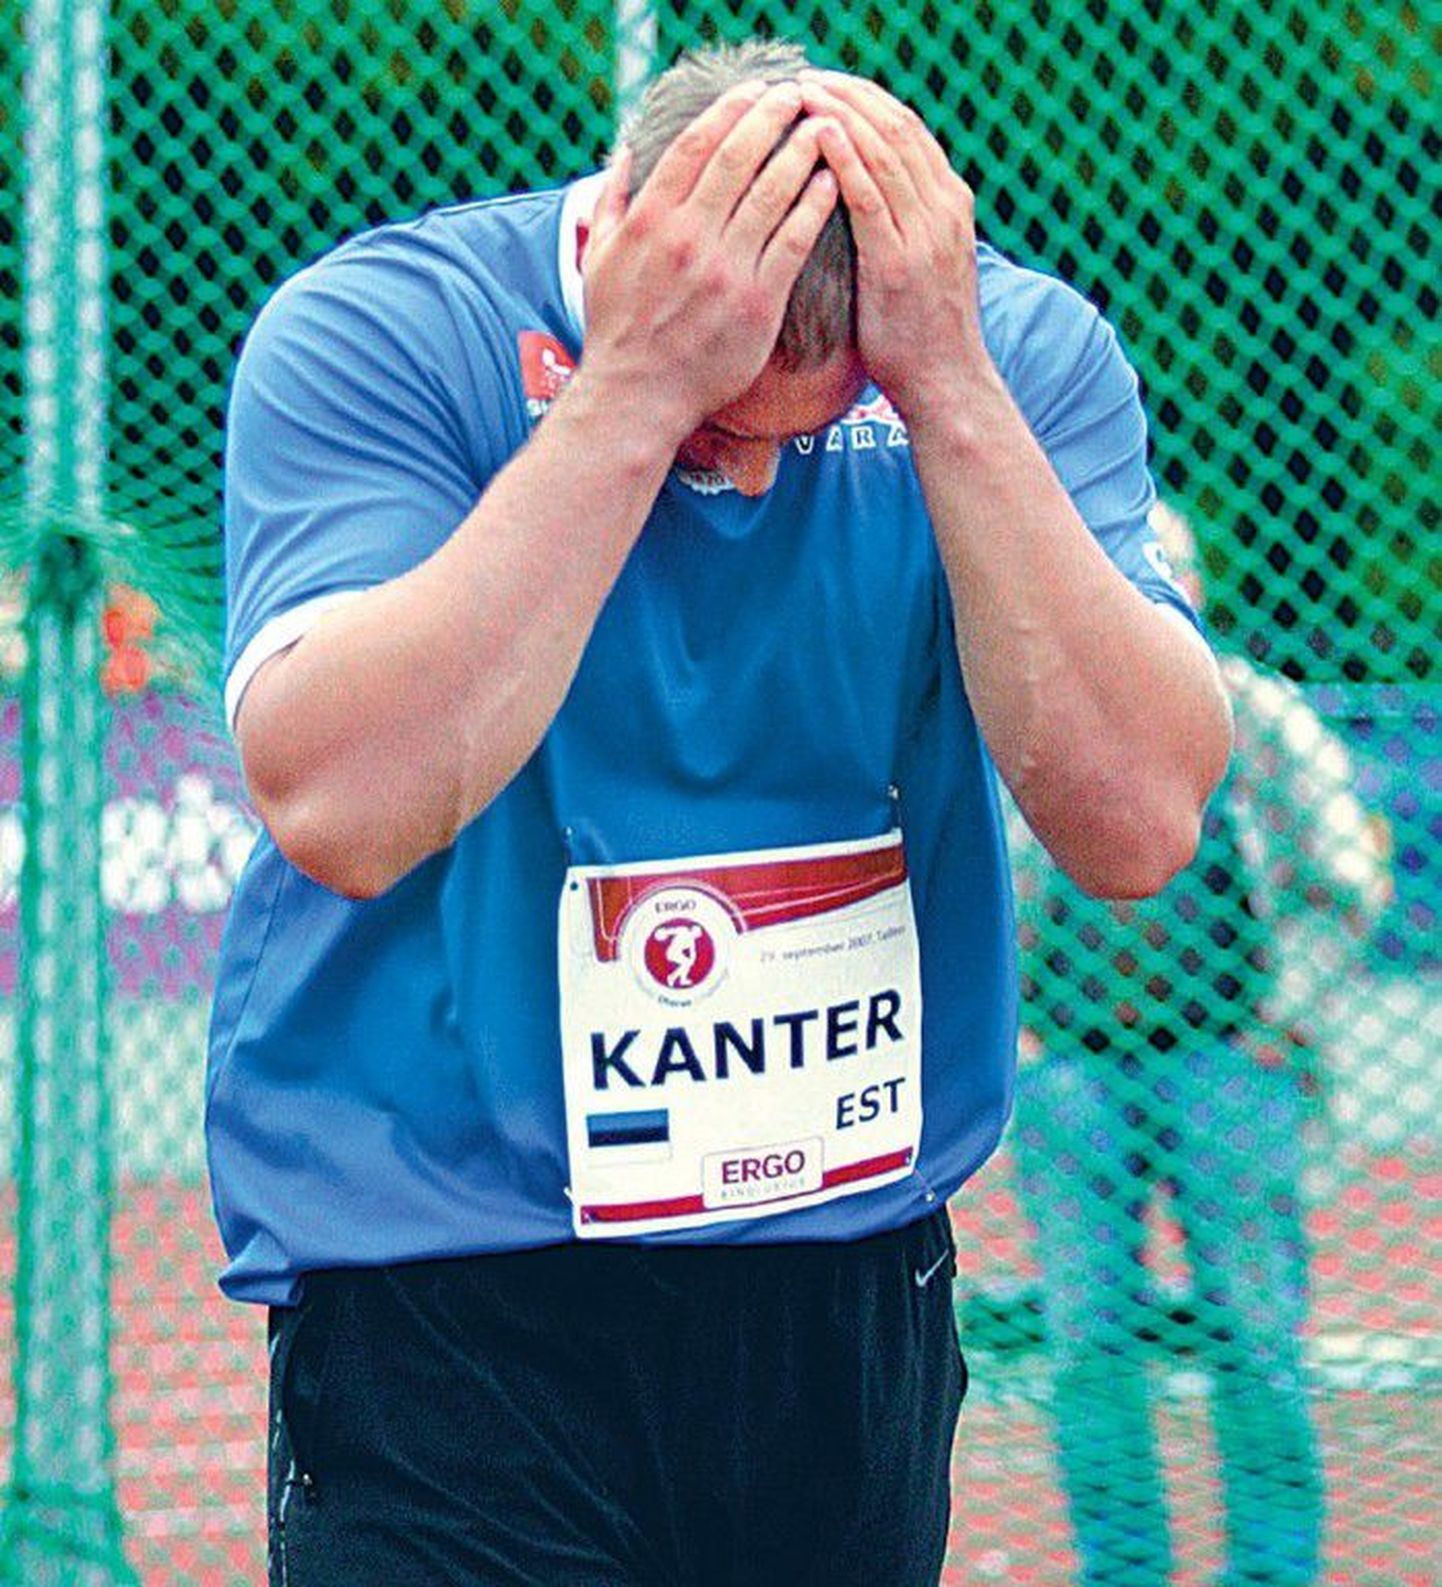 Eesti olümpialootus Gerd Kanter kaotas Virgilijus Aleknale taas viimase katsega..